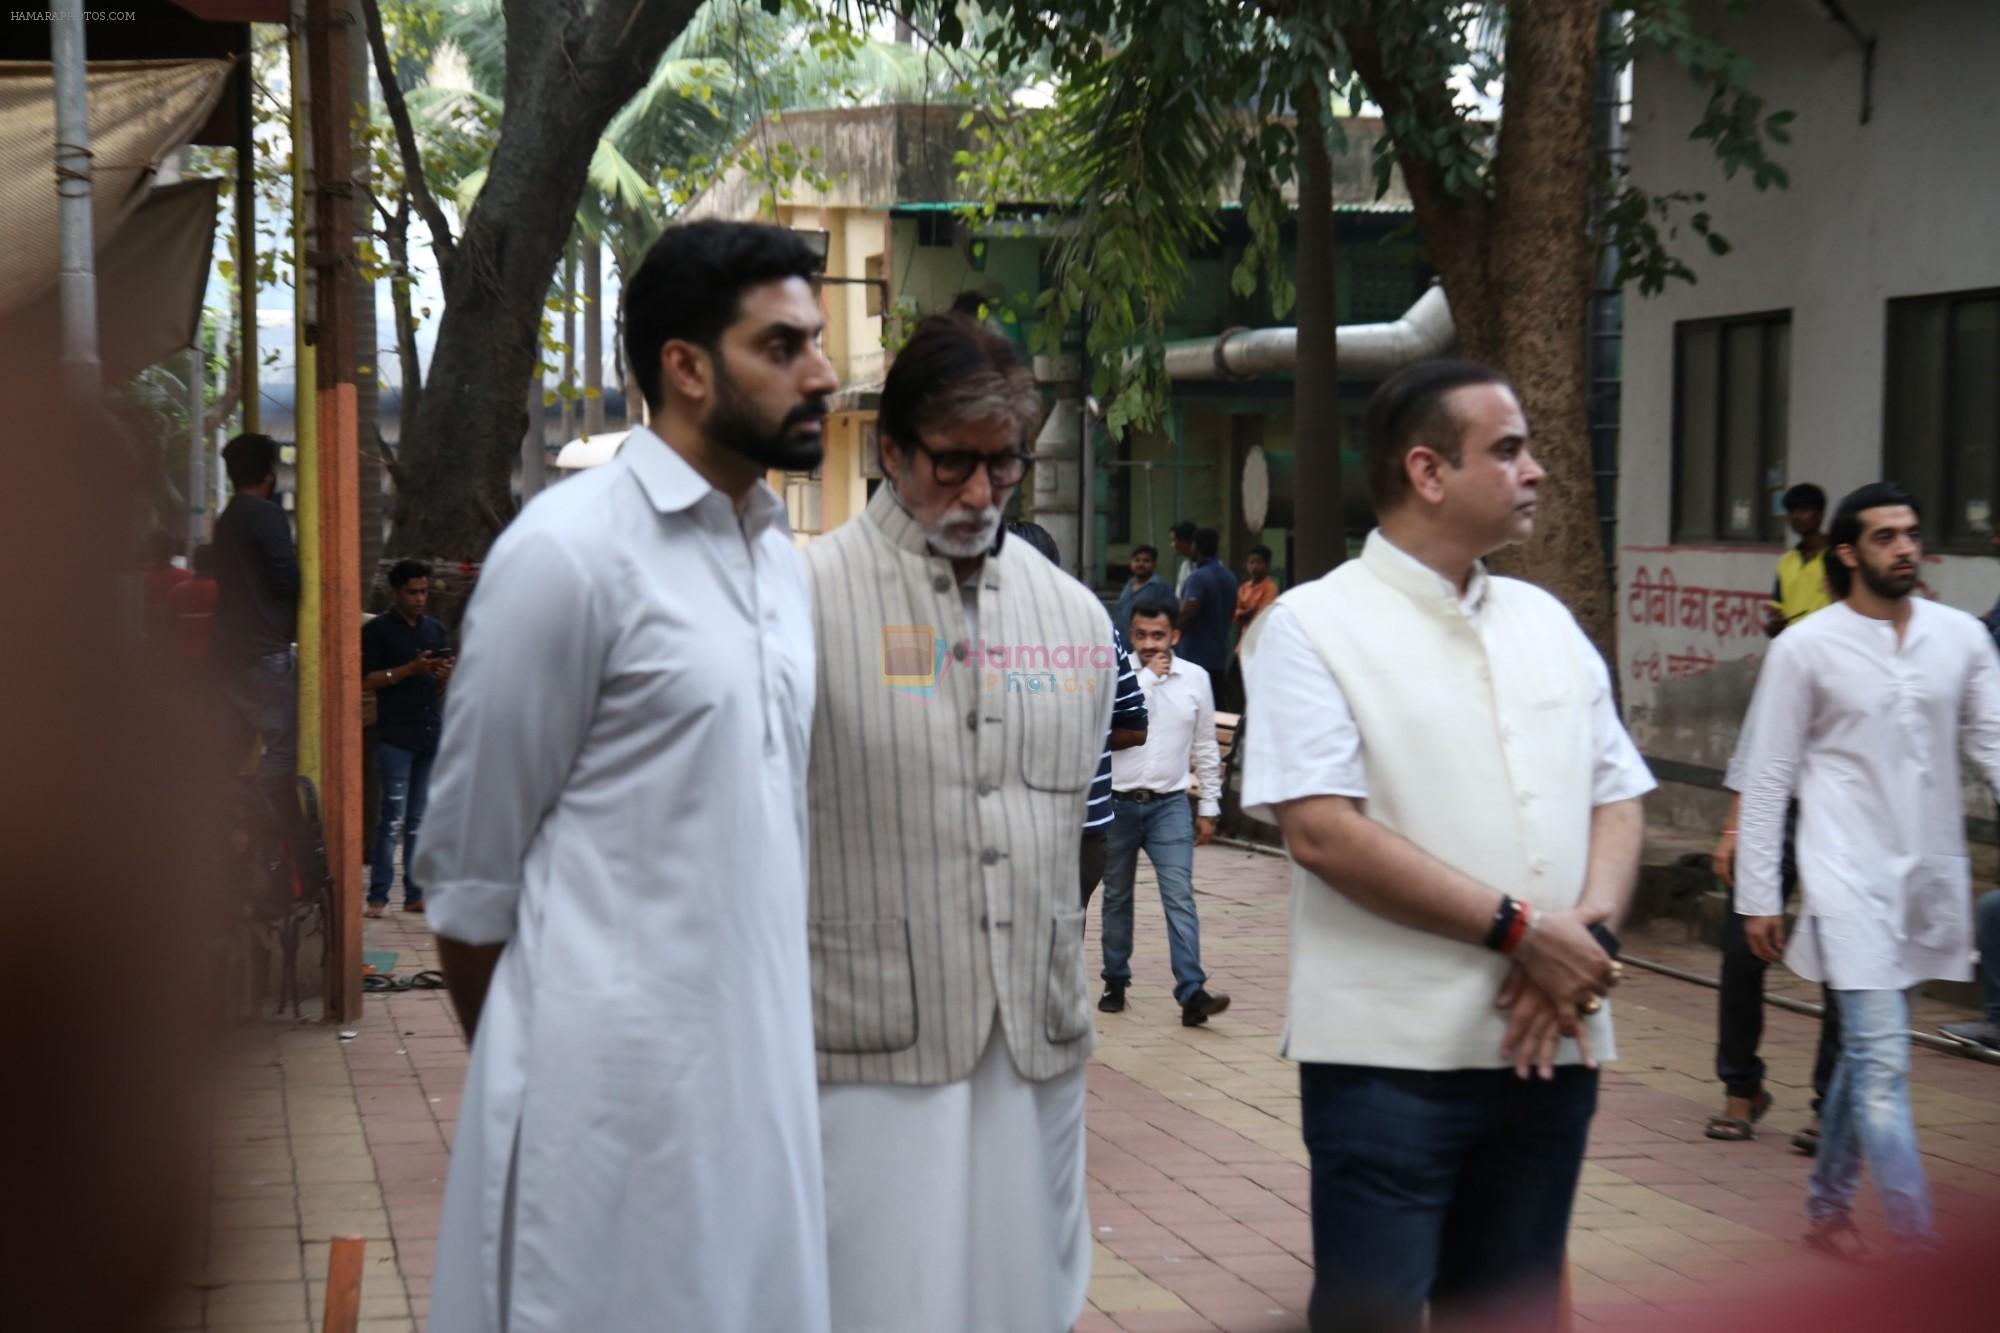 Abhishek Bachchan, Amitabh Bachchan at Krishna Raj Kapoor's funeral in Chembur on 1st Oct 2018